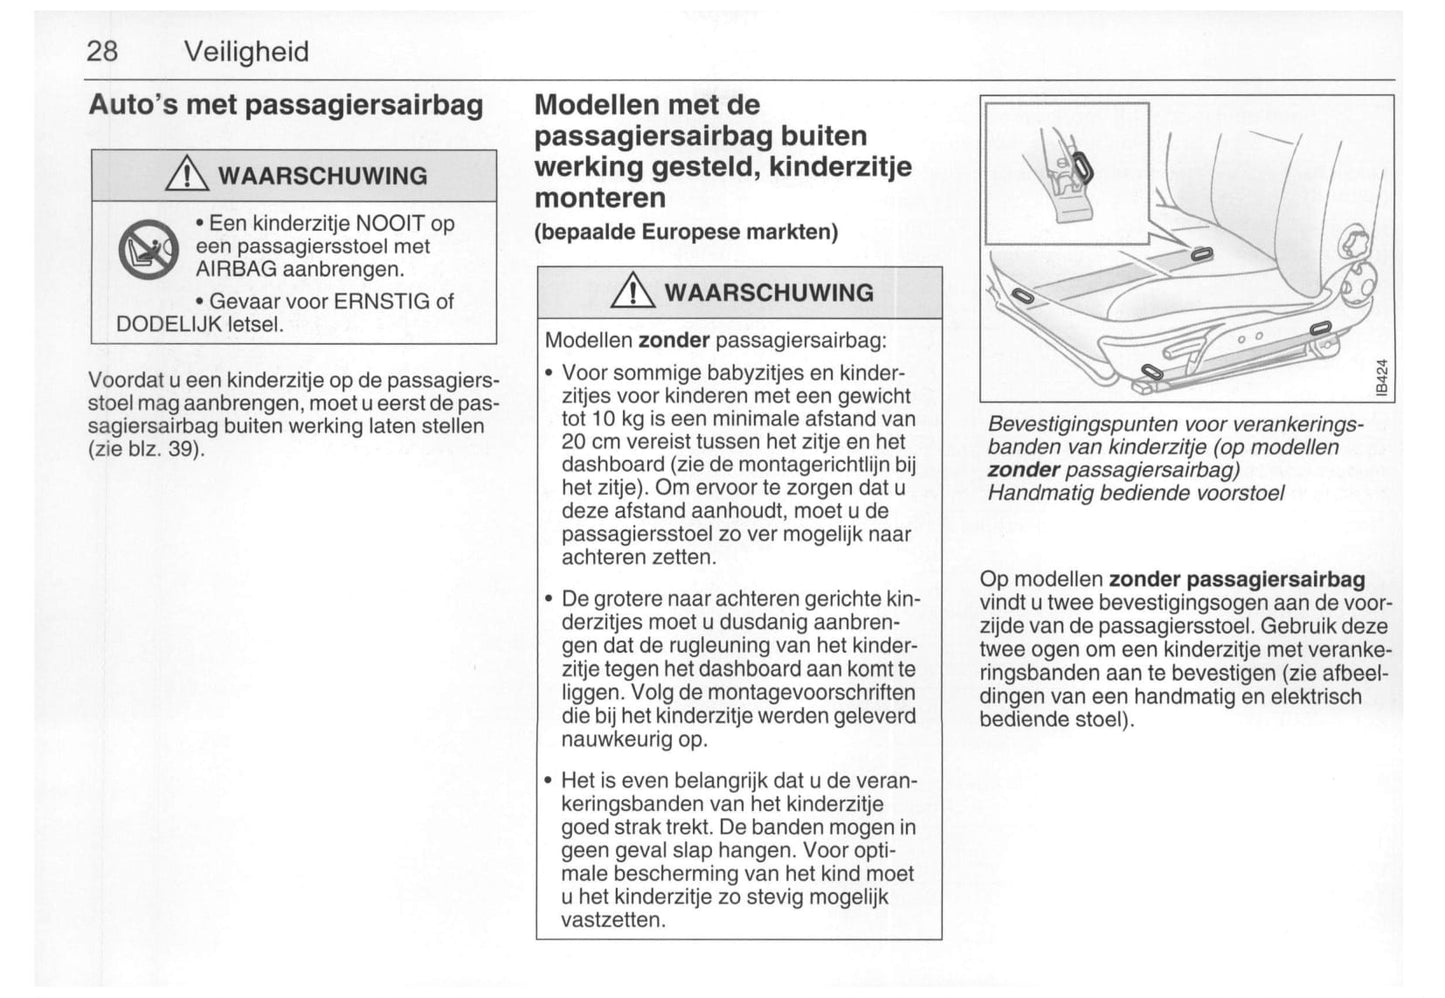 2001-2005 Saab 9-5 Owner's Manual | Dutch